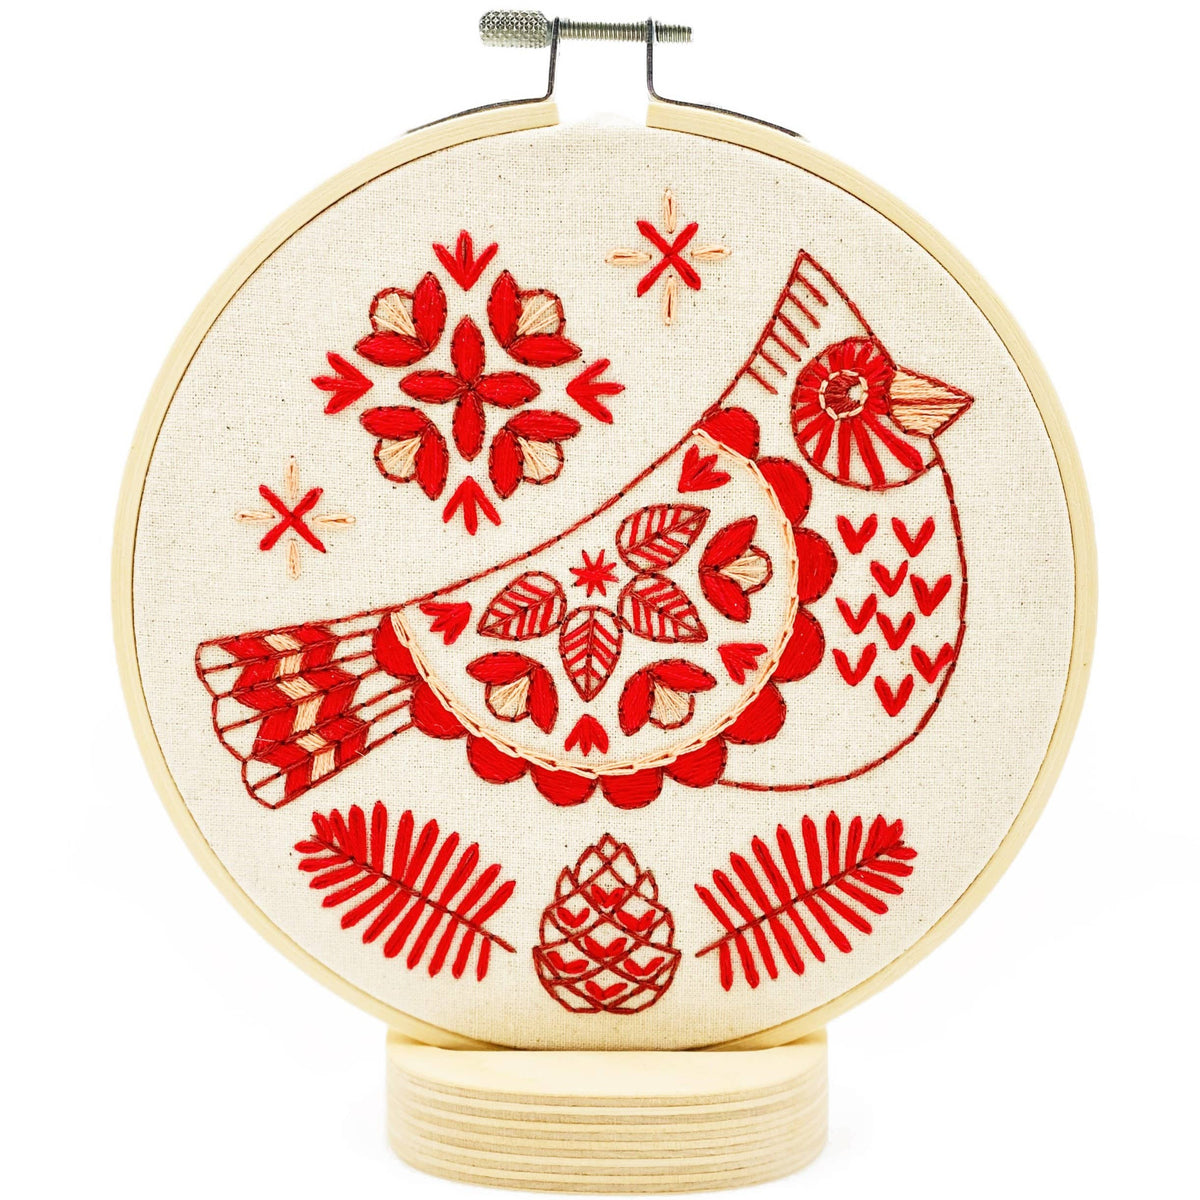 Hook, Line & Tinker Embroidery Kits - Folk Cardinal Complete Embroidery Kit - Green Ash Decor